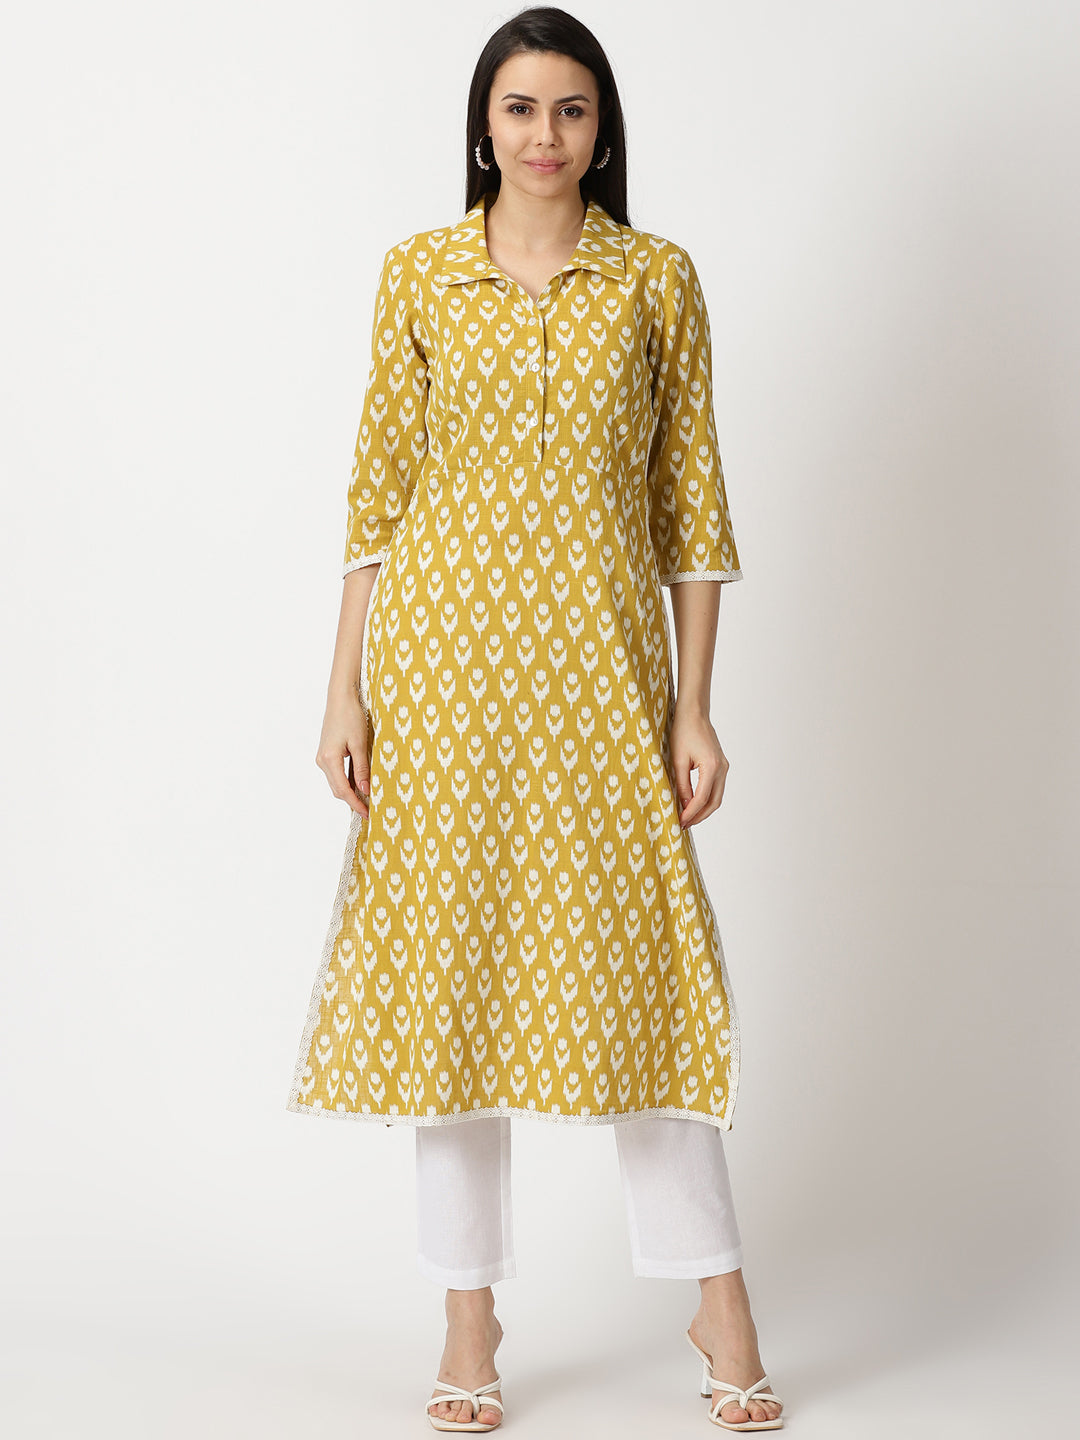 65 South cotton kurti ideas  kurta designs, kurta designs women